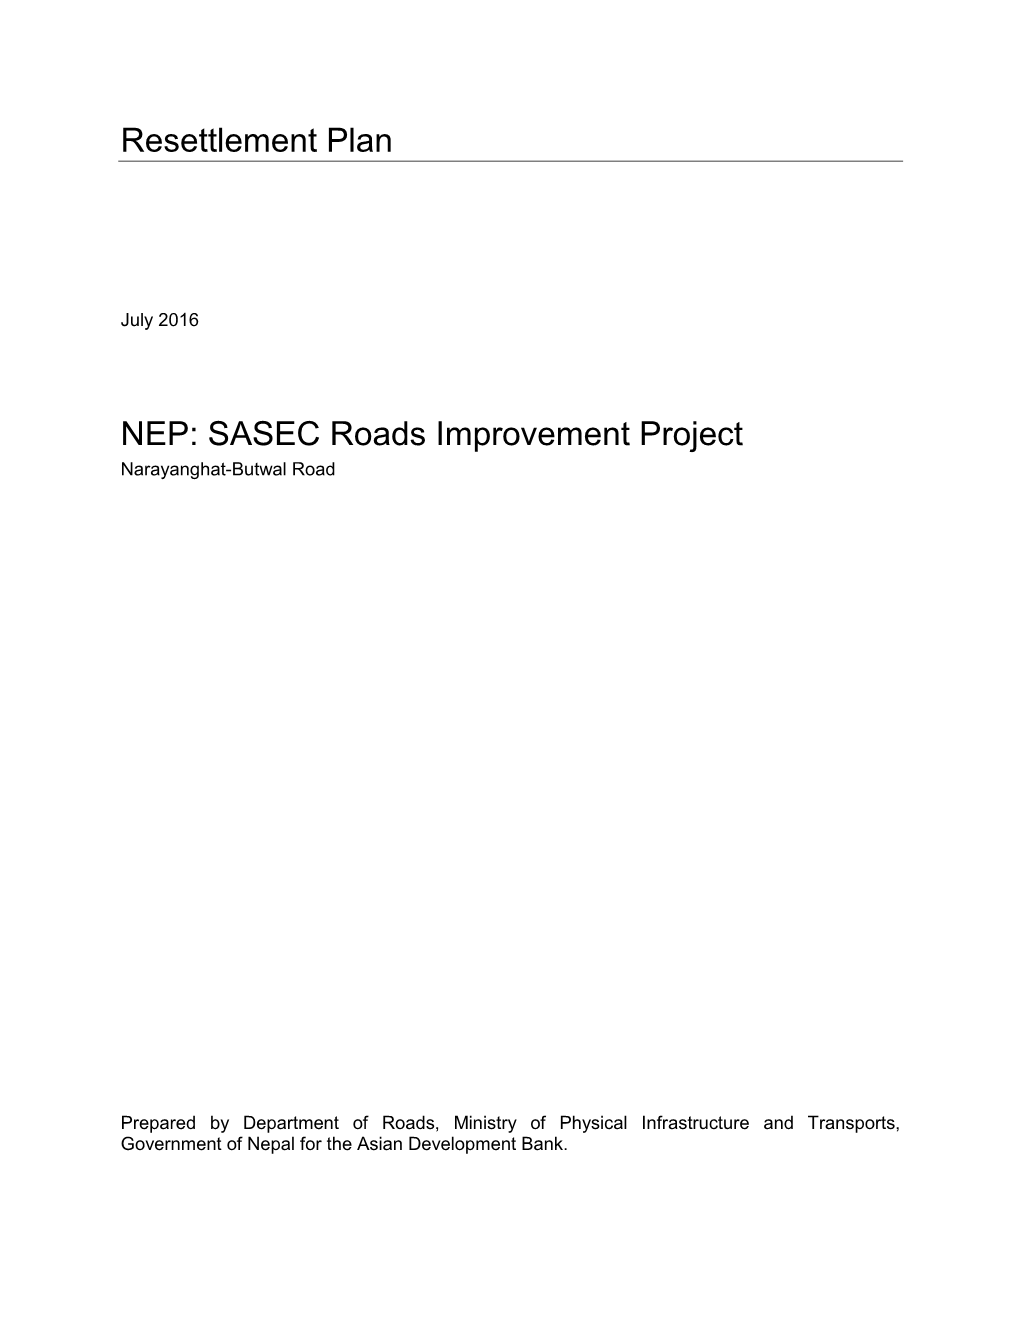 Resettlement Plan NEP: SASEC Roads Improvement Project